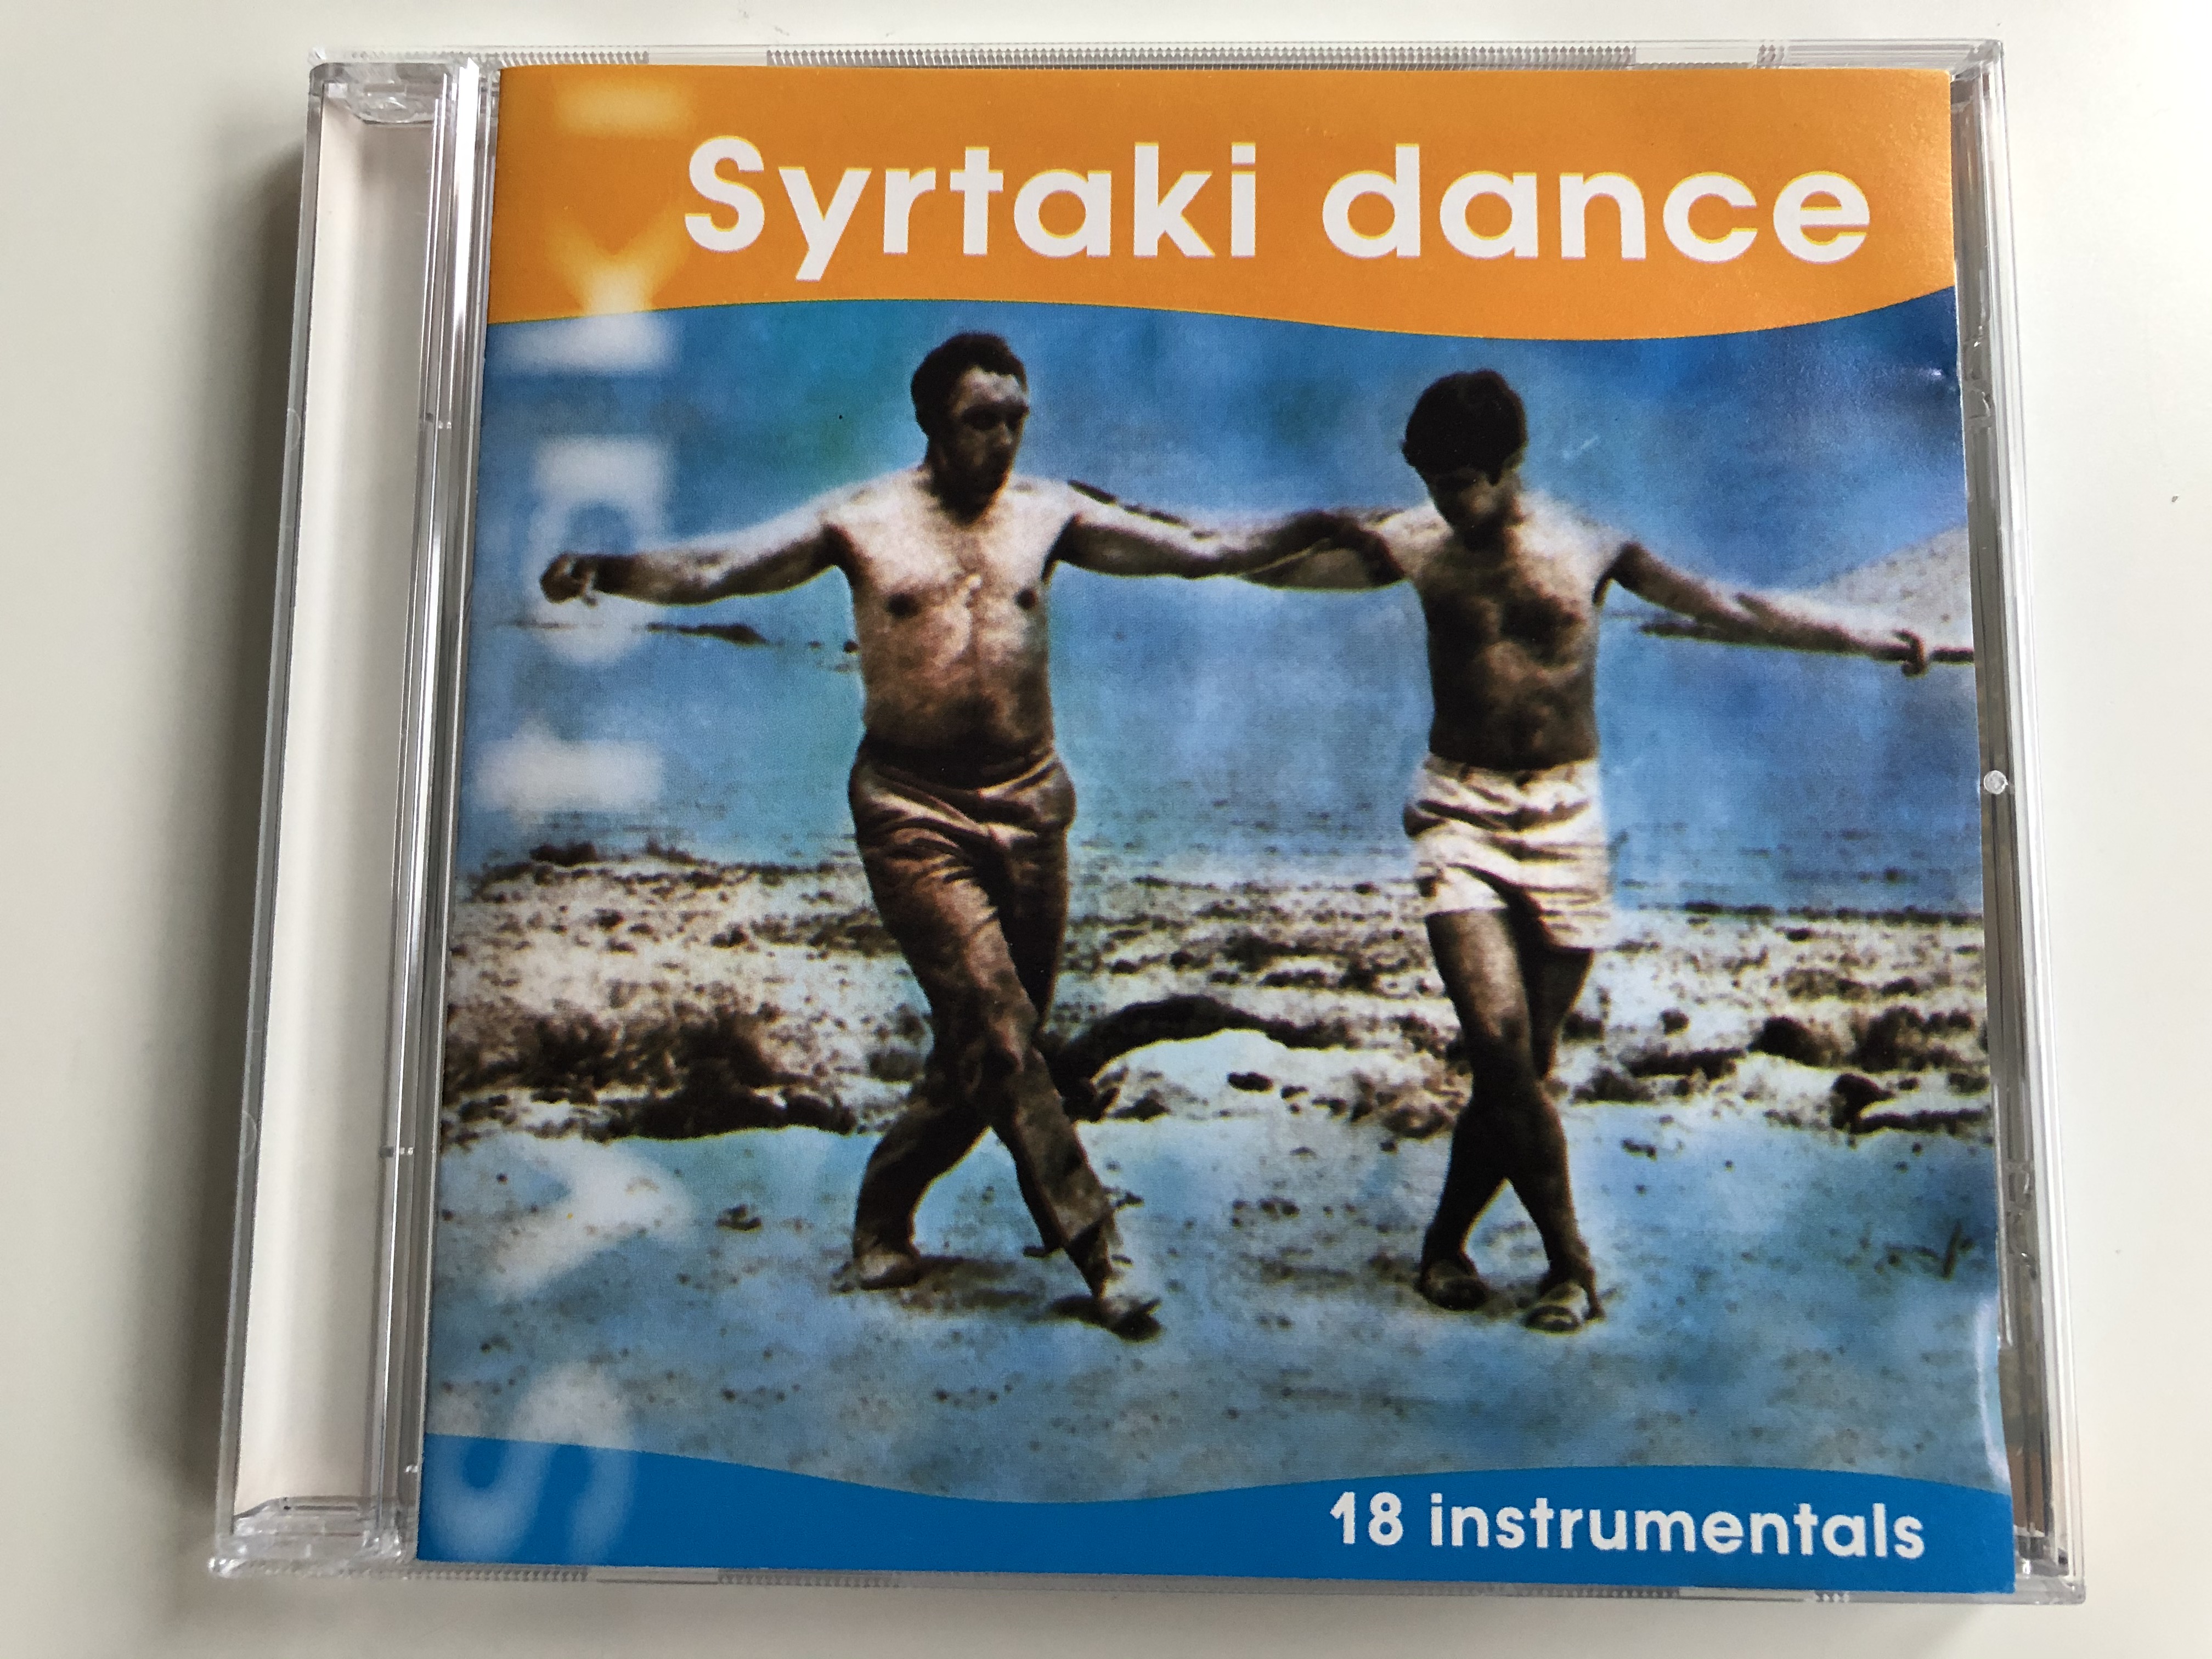 syrtaki-dance-18-instrumentals-audio-cd-2004-stereo-.-.-.-218-1-.jpg